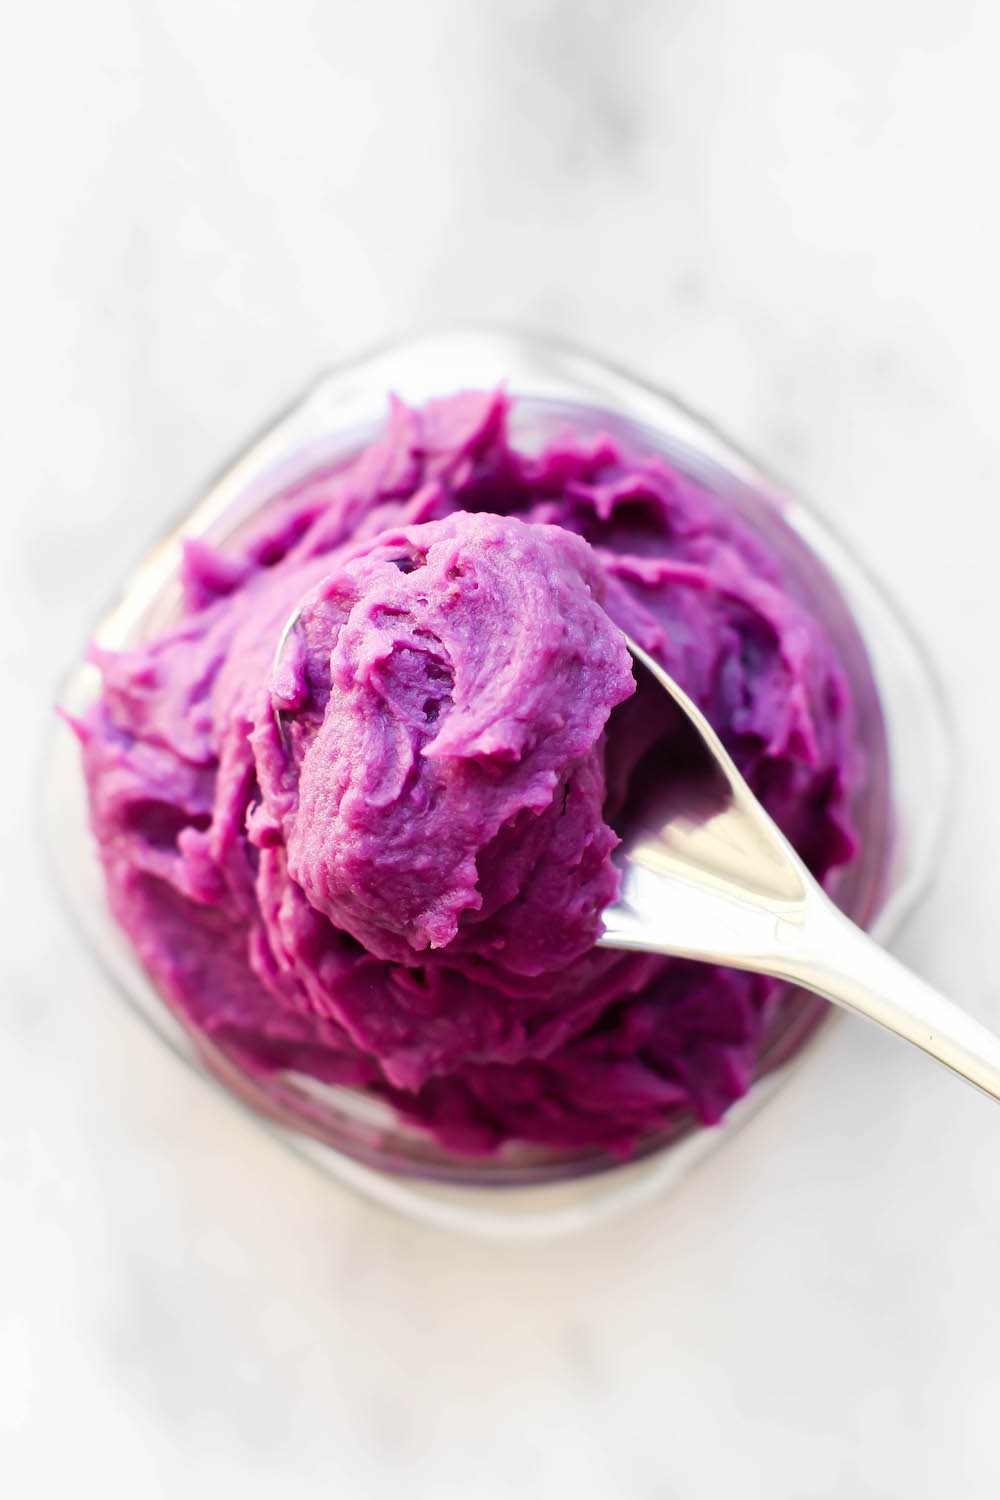 Purple Sweet Potato Frosting